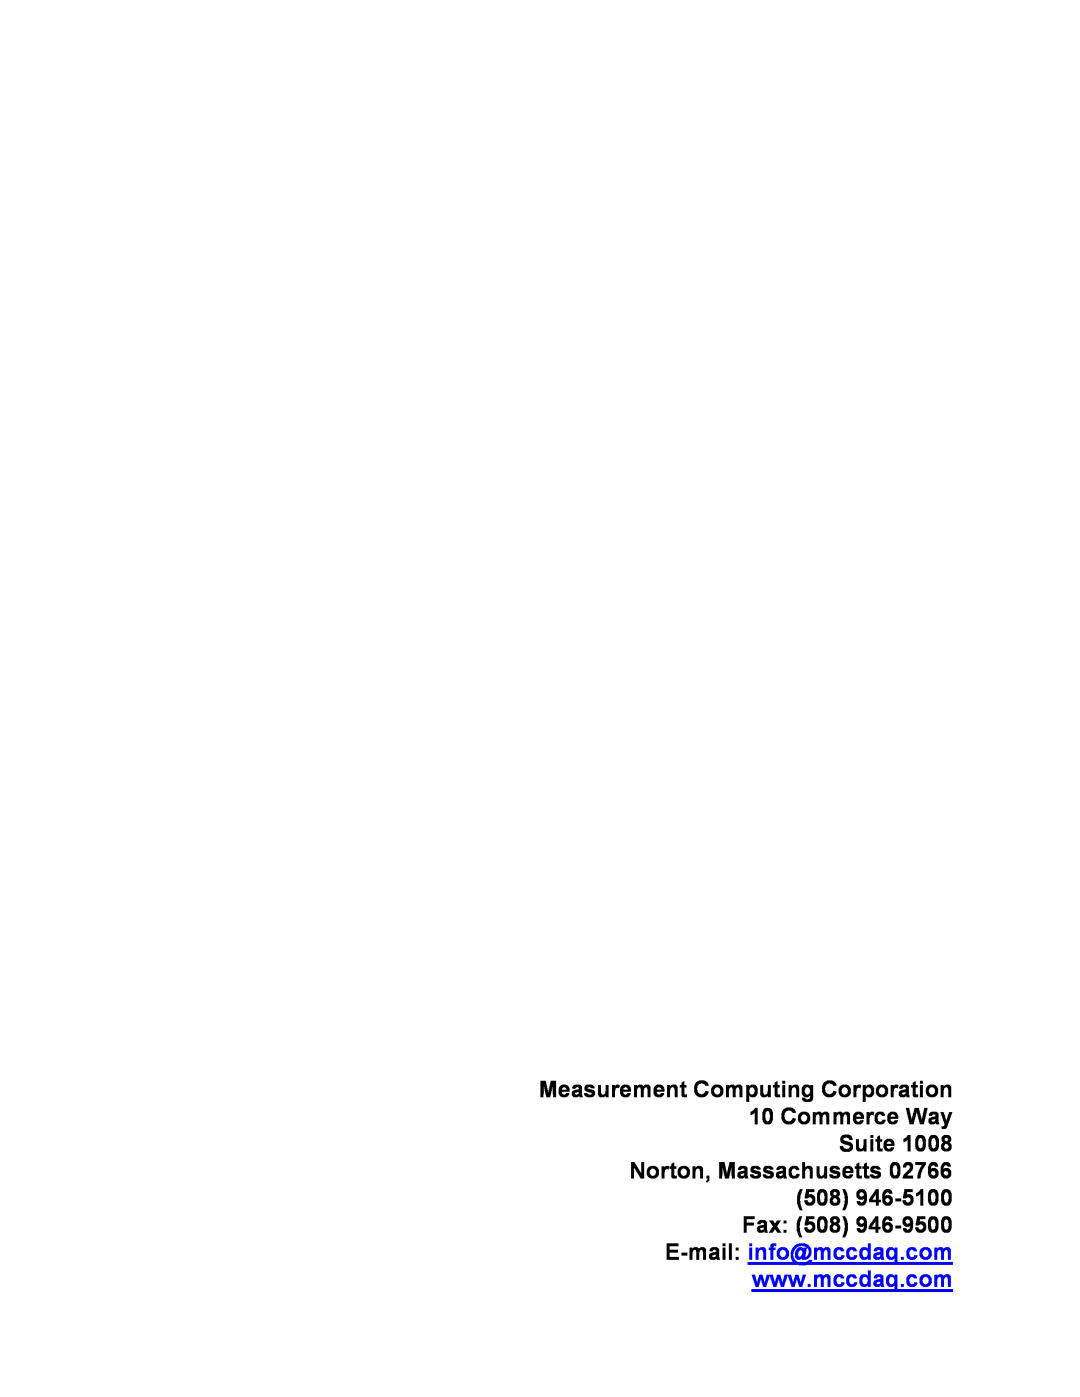 IBM CIO-DIO48H manual Measurement Computing Corporation 10 Commerce Way Suite, Norton, Massachusetts 508 Fax 